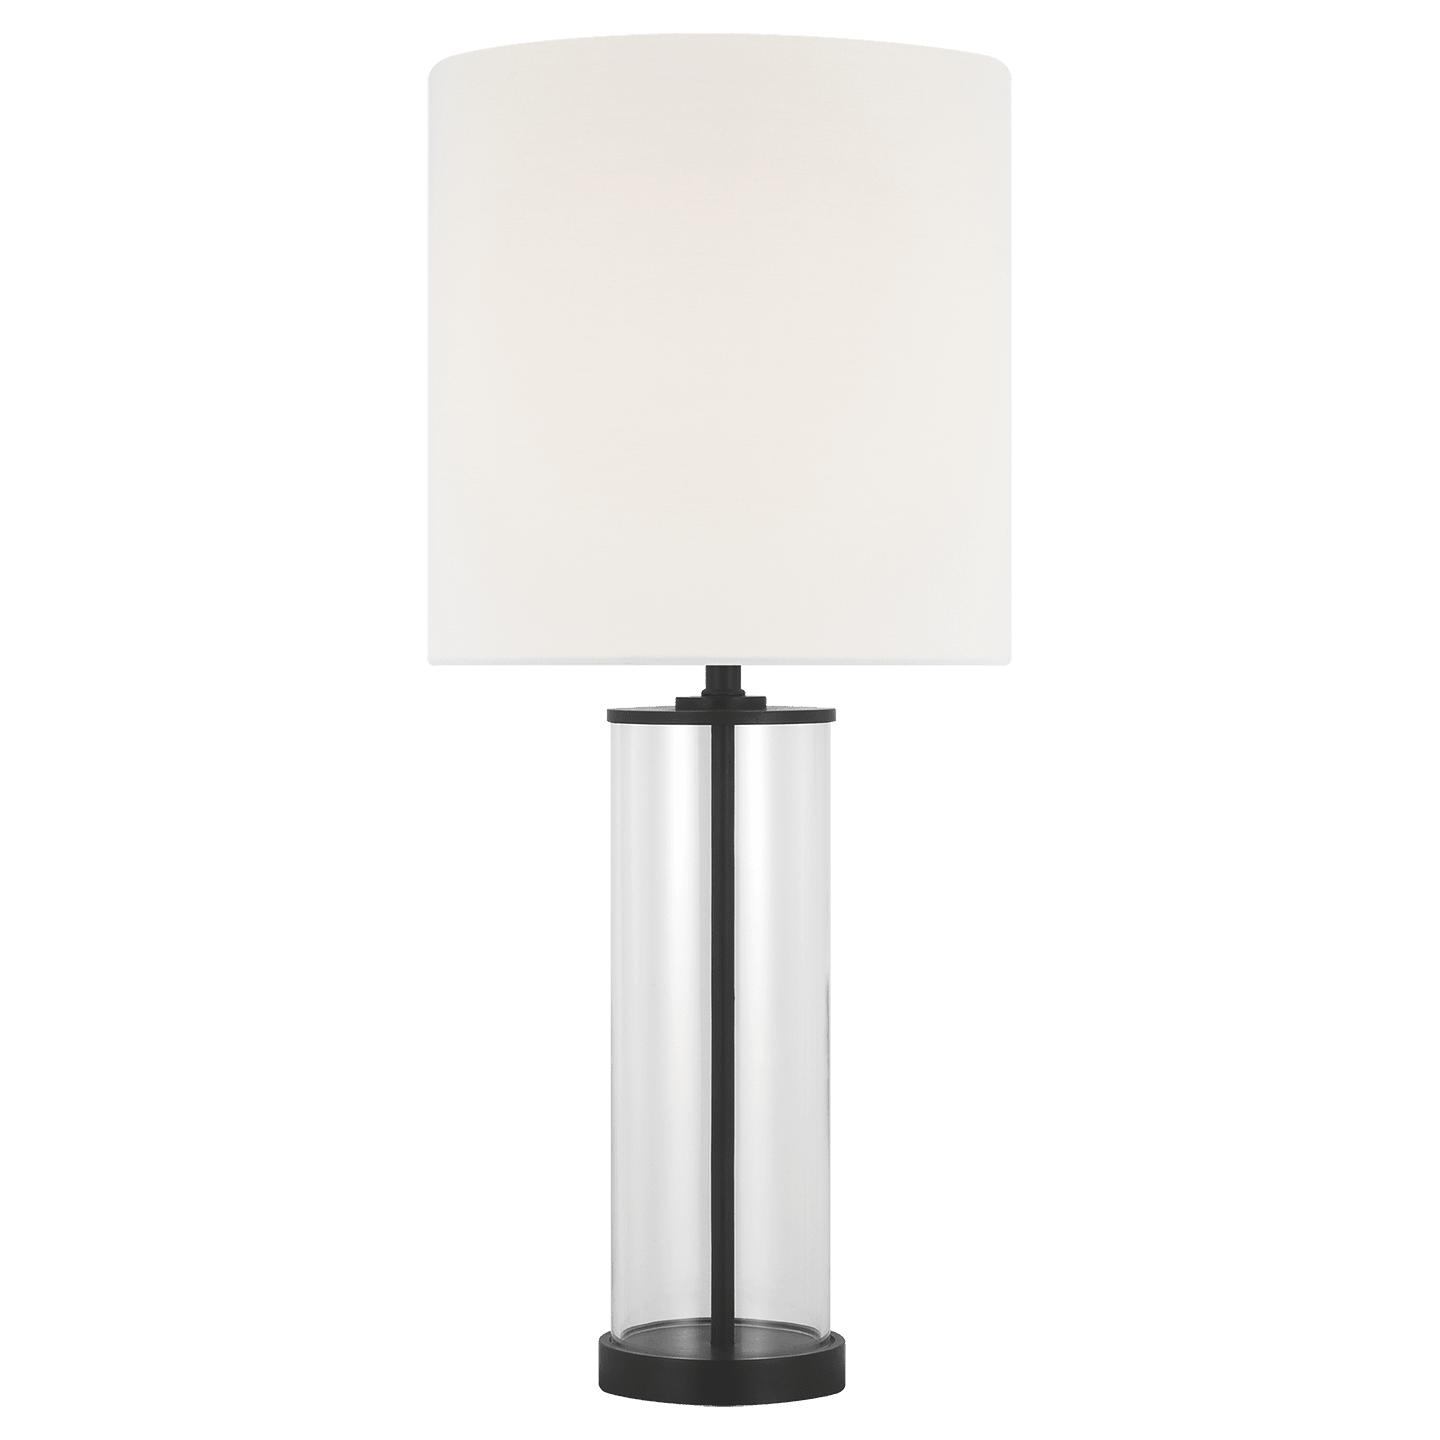 Купить Настольная лампа Leigh Table Lamp в интернет-магазине roooms.ru